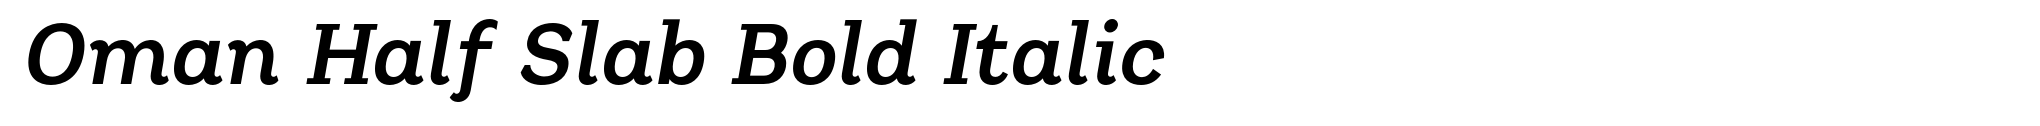 Oman Half Slab Bold Italic image